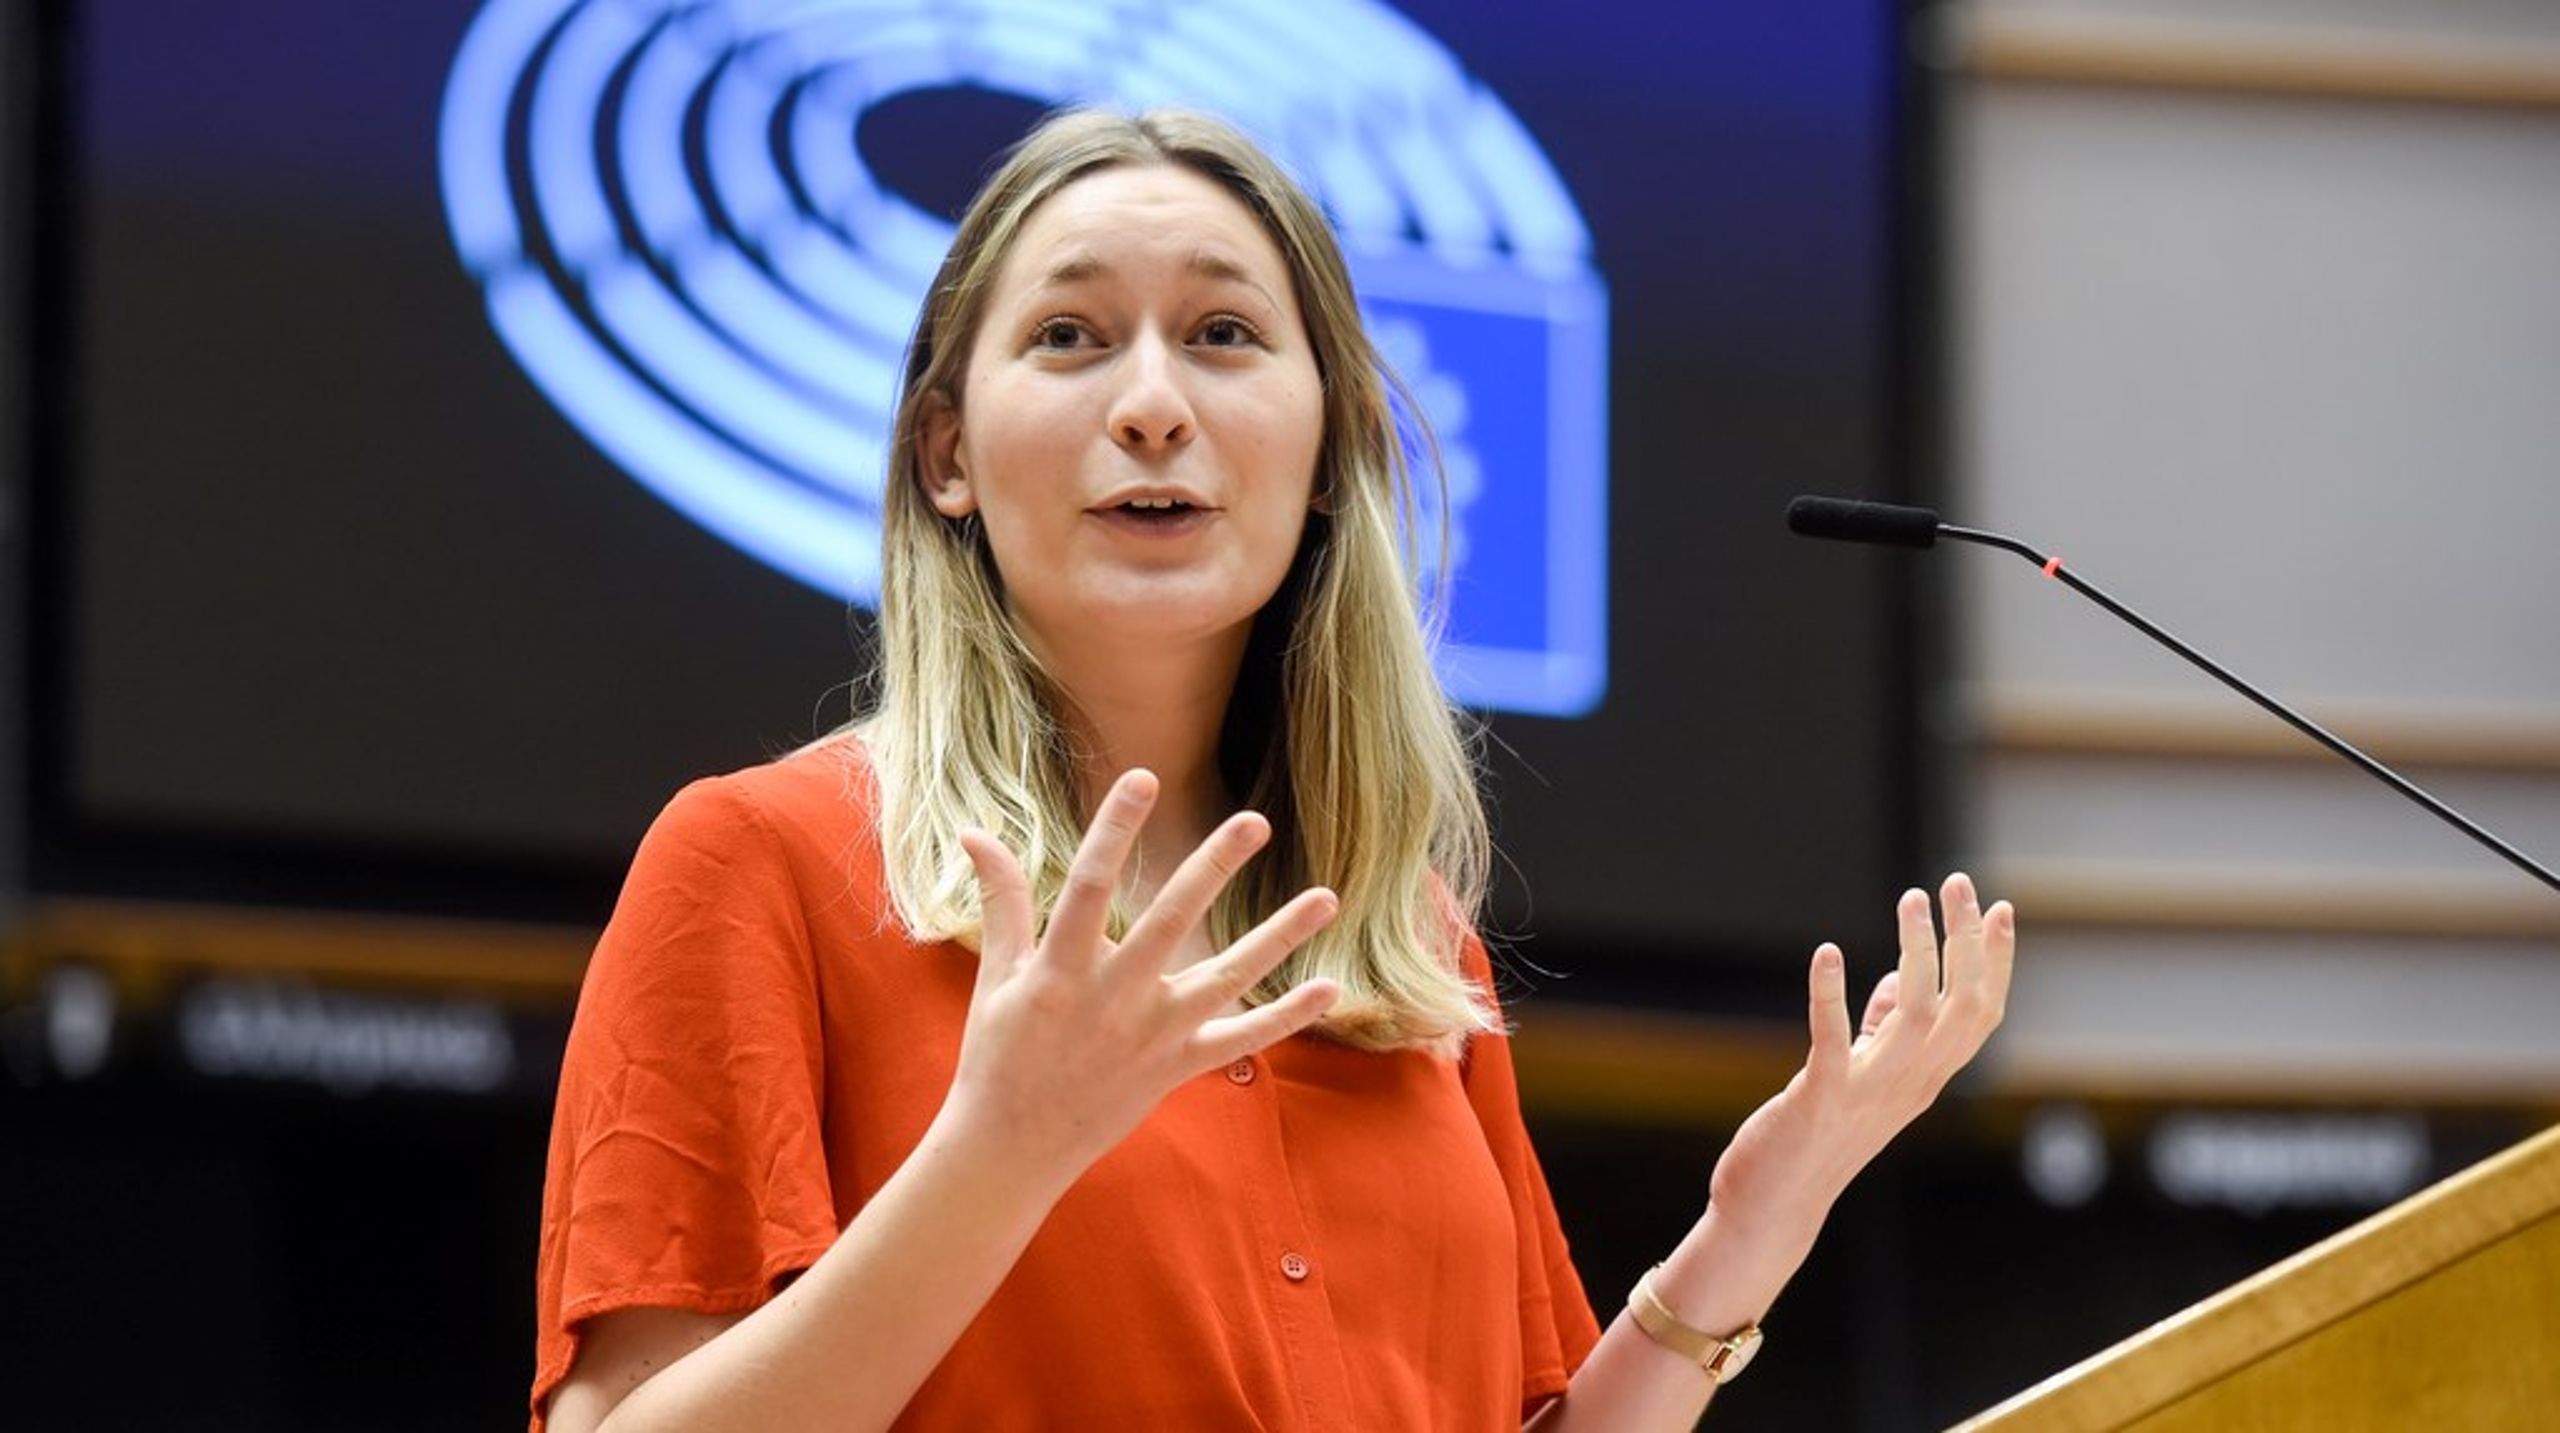 Kira Marie Peter-Hansen&nbsp;blev i 2019&nbsp;valgt til Europa-Parlamentet som den yngste nogensinde.&nbsp;